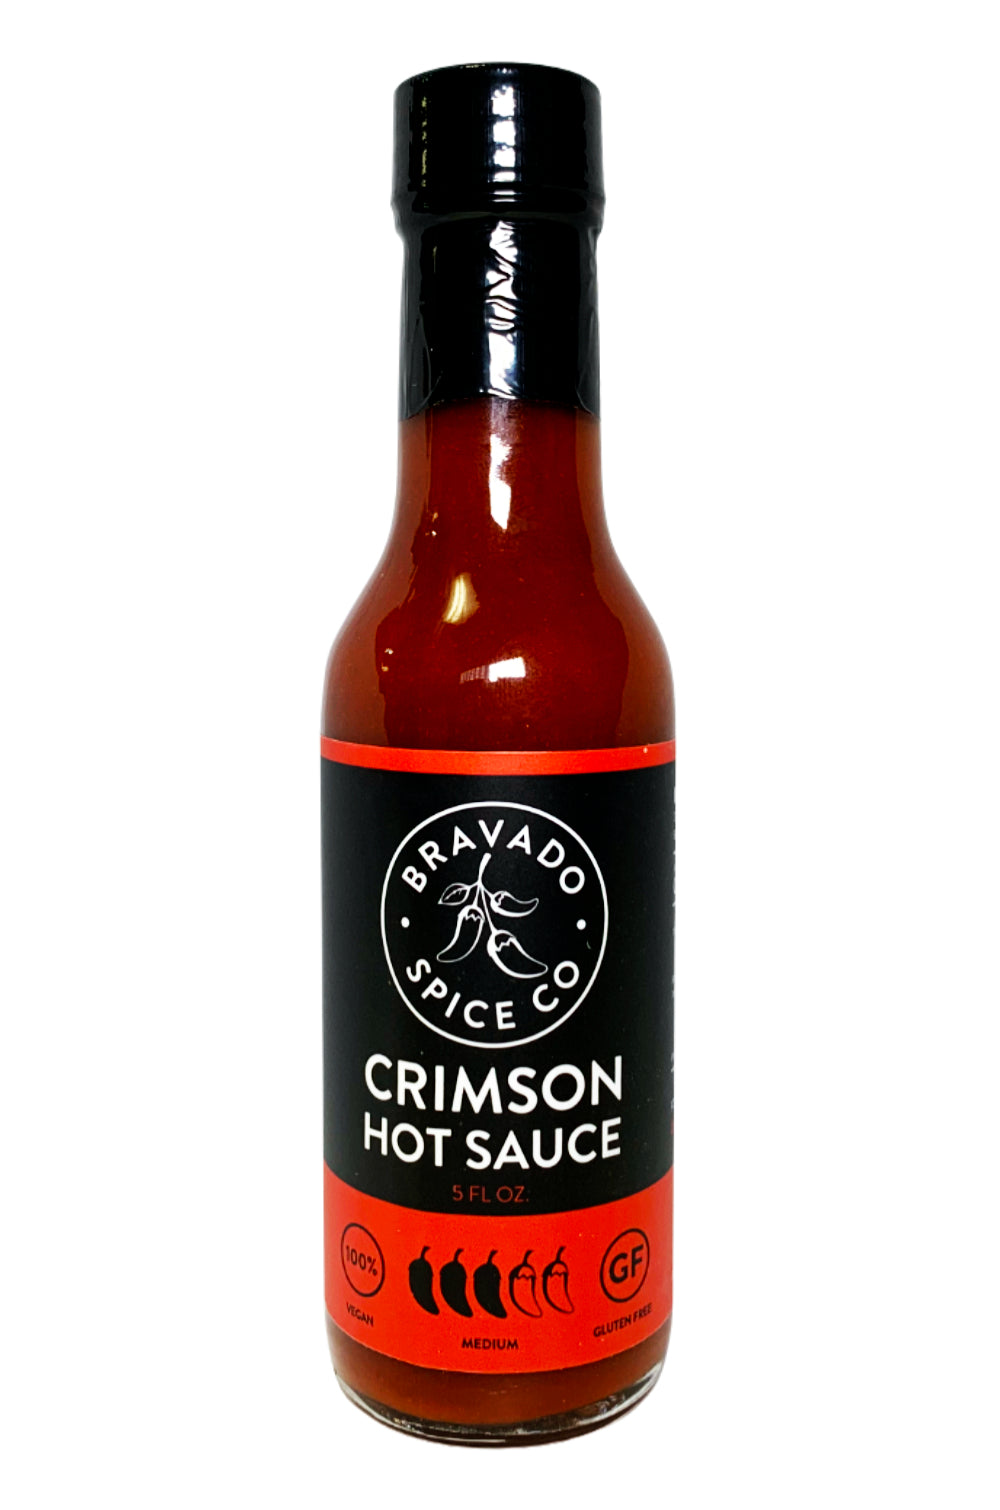 Bravado Crimson Hot Sauce